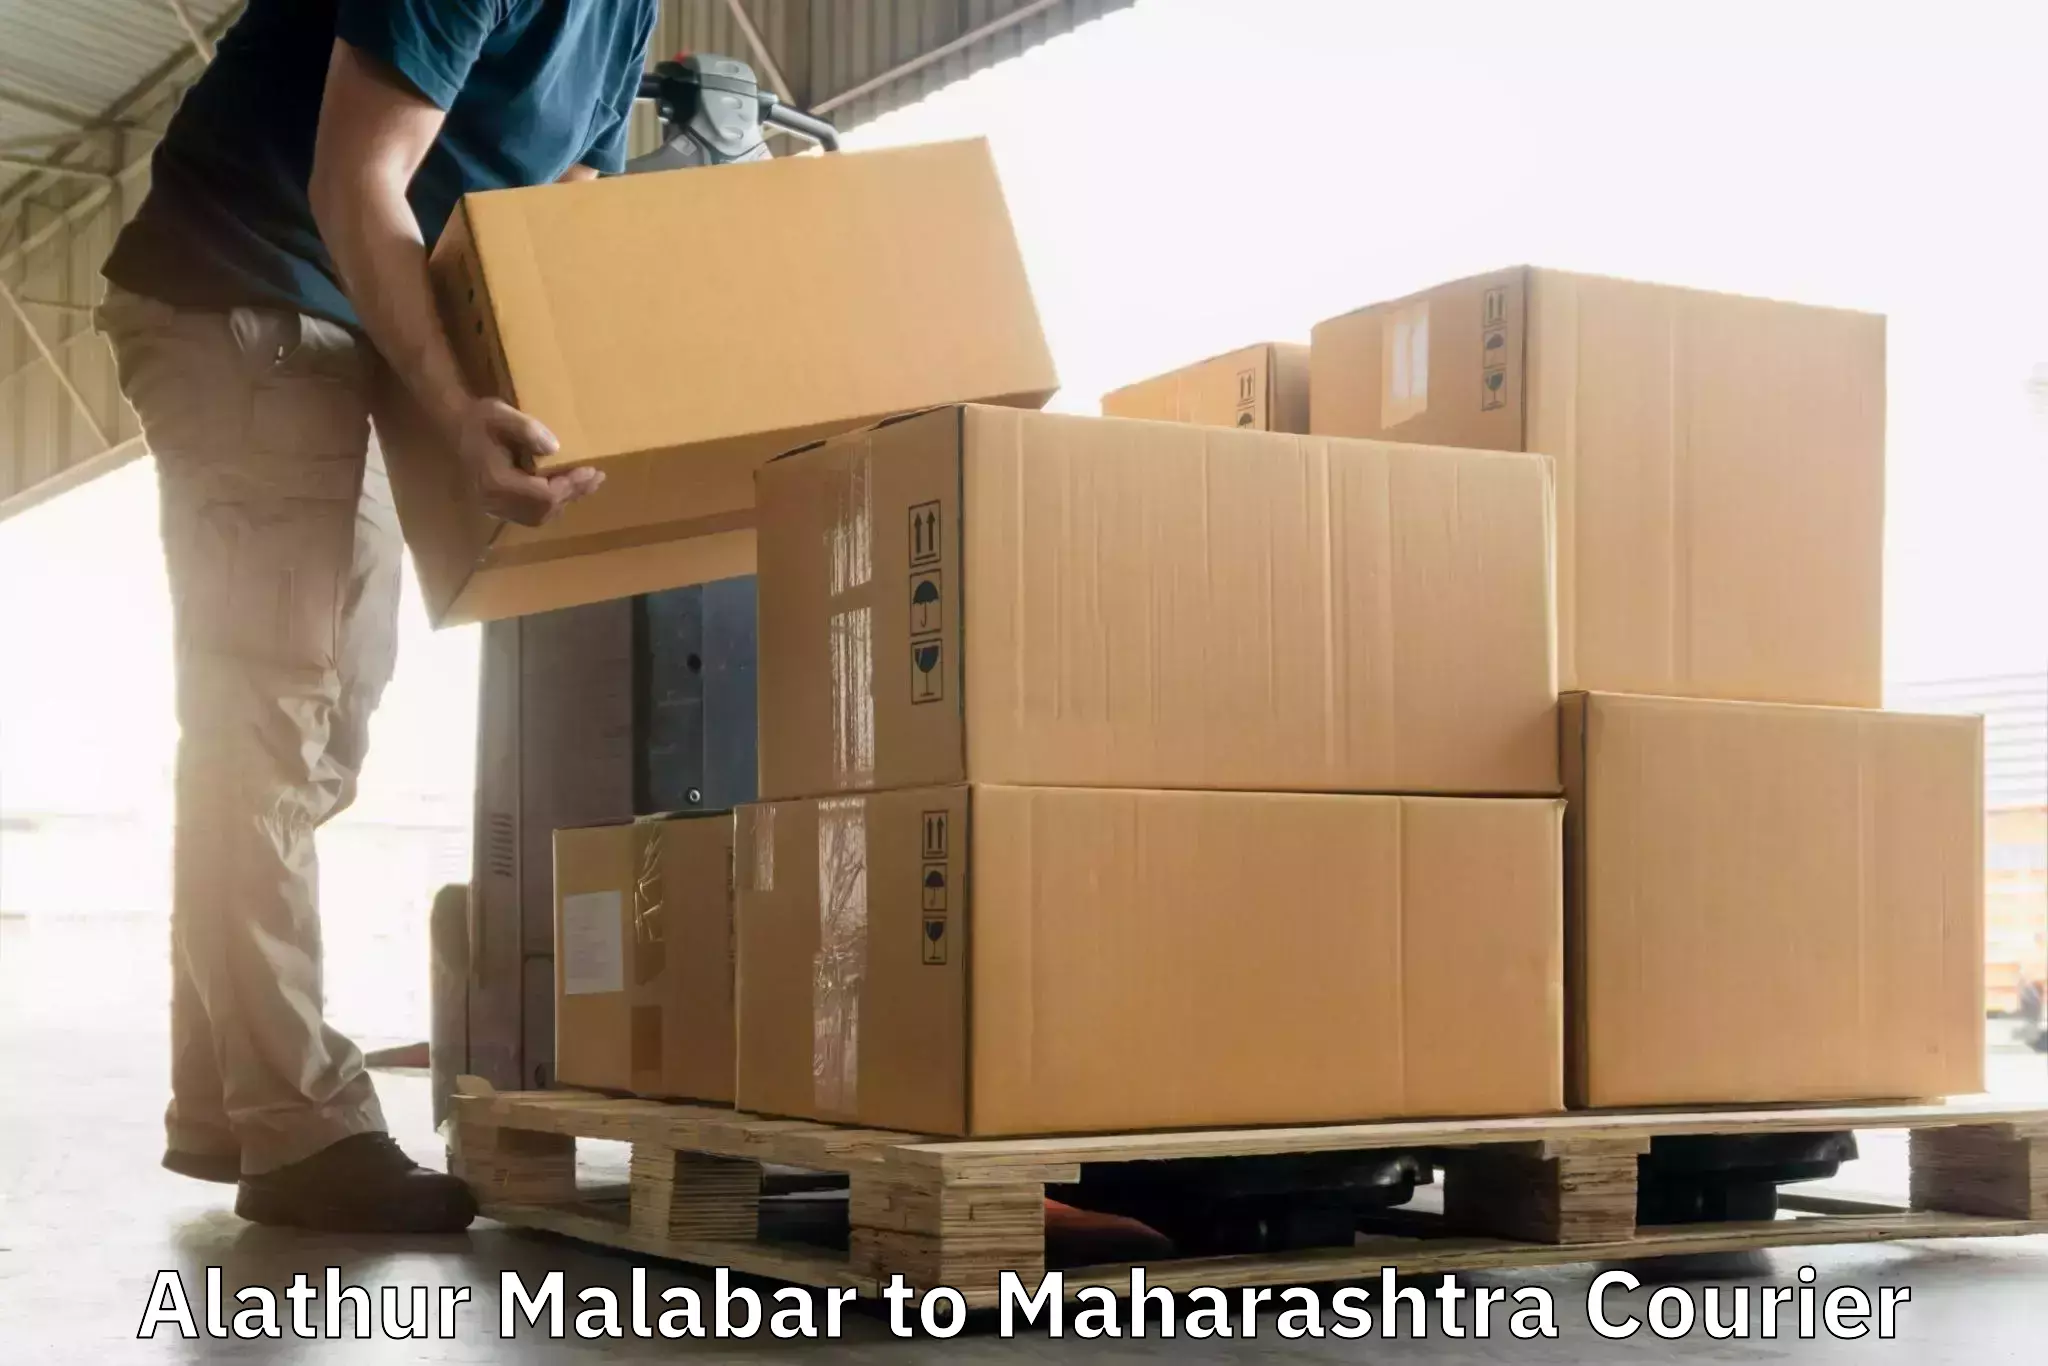 Speedy delivery service Alathur Malabar to Brahmapuri